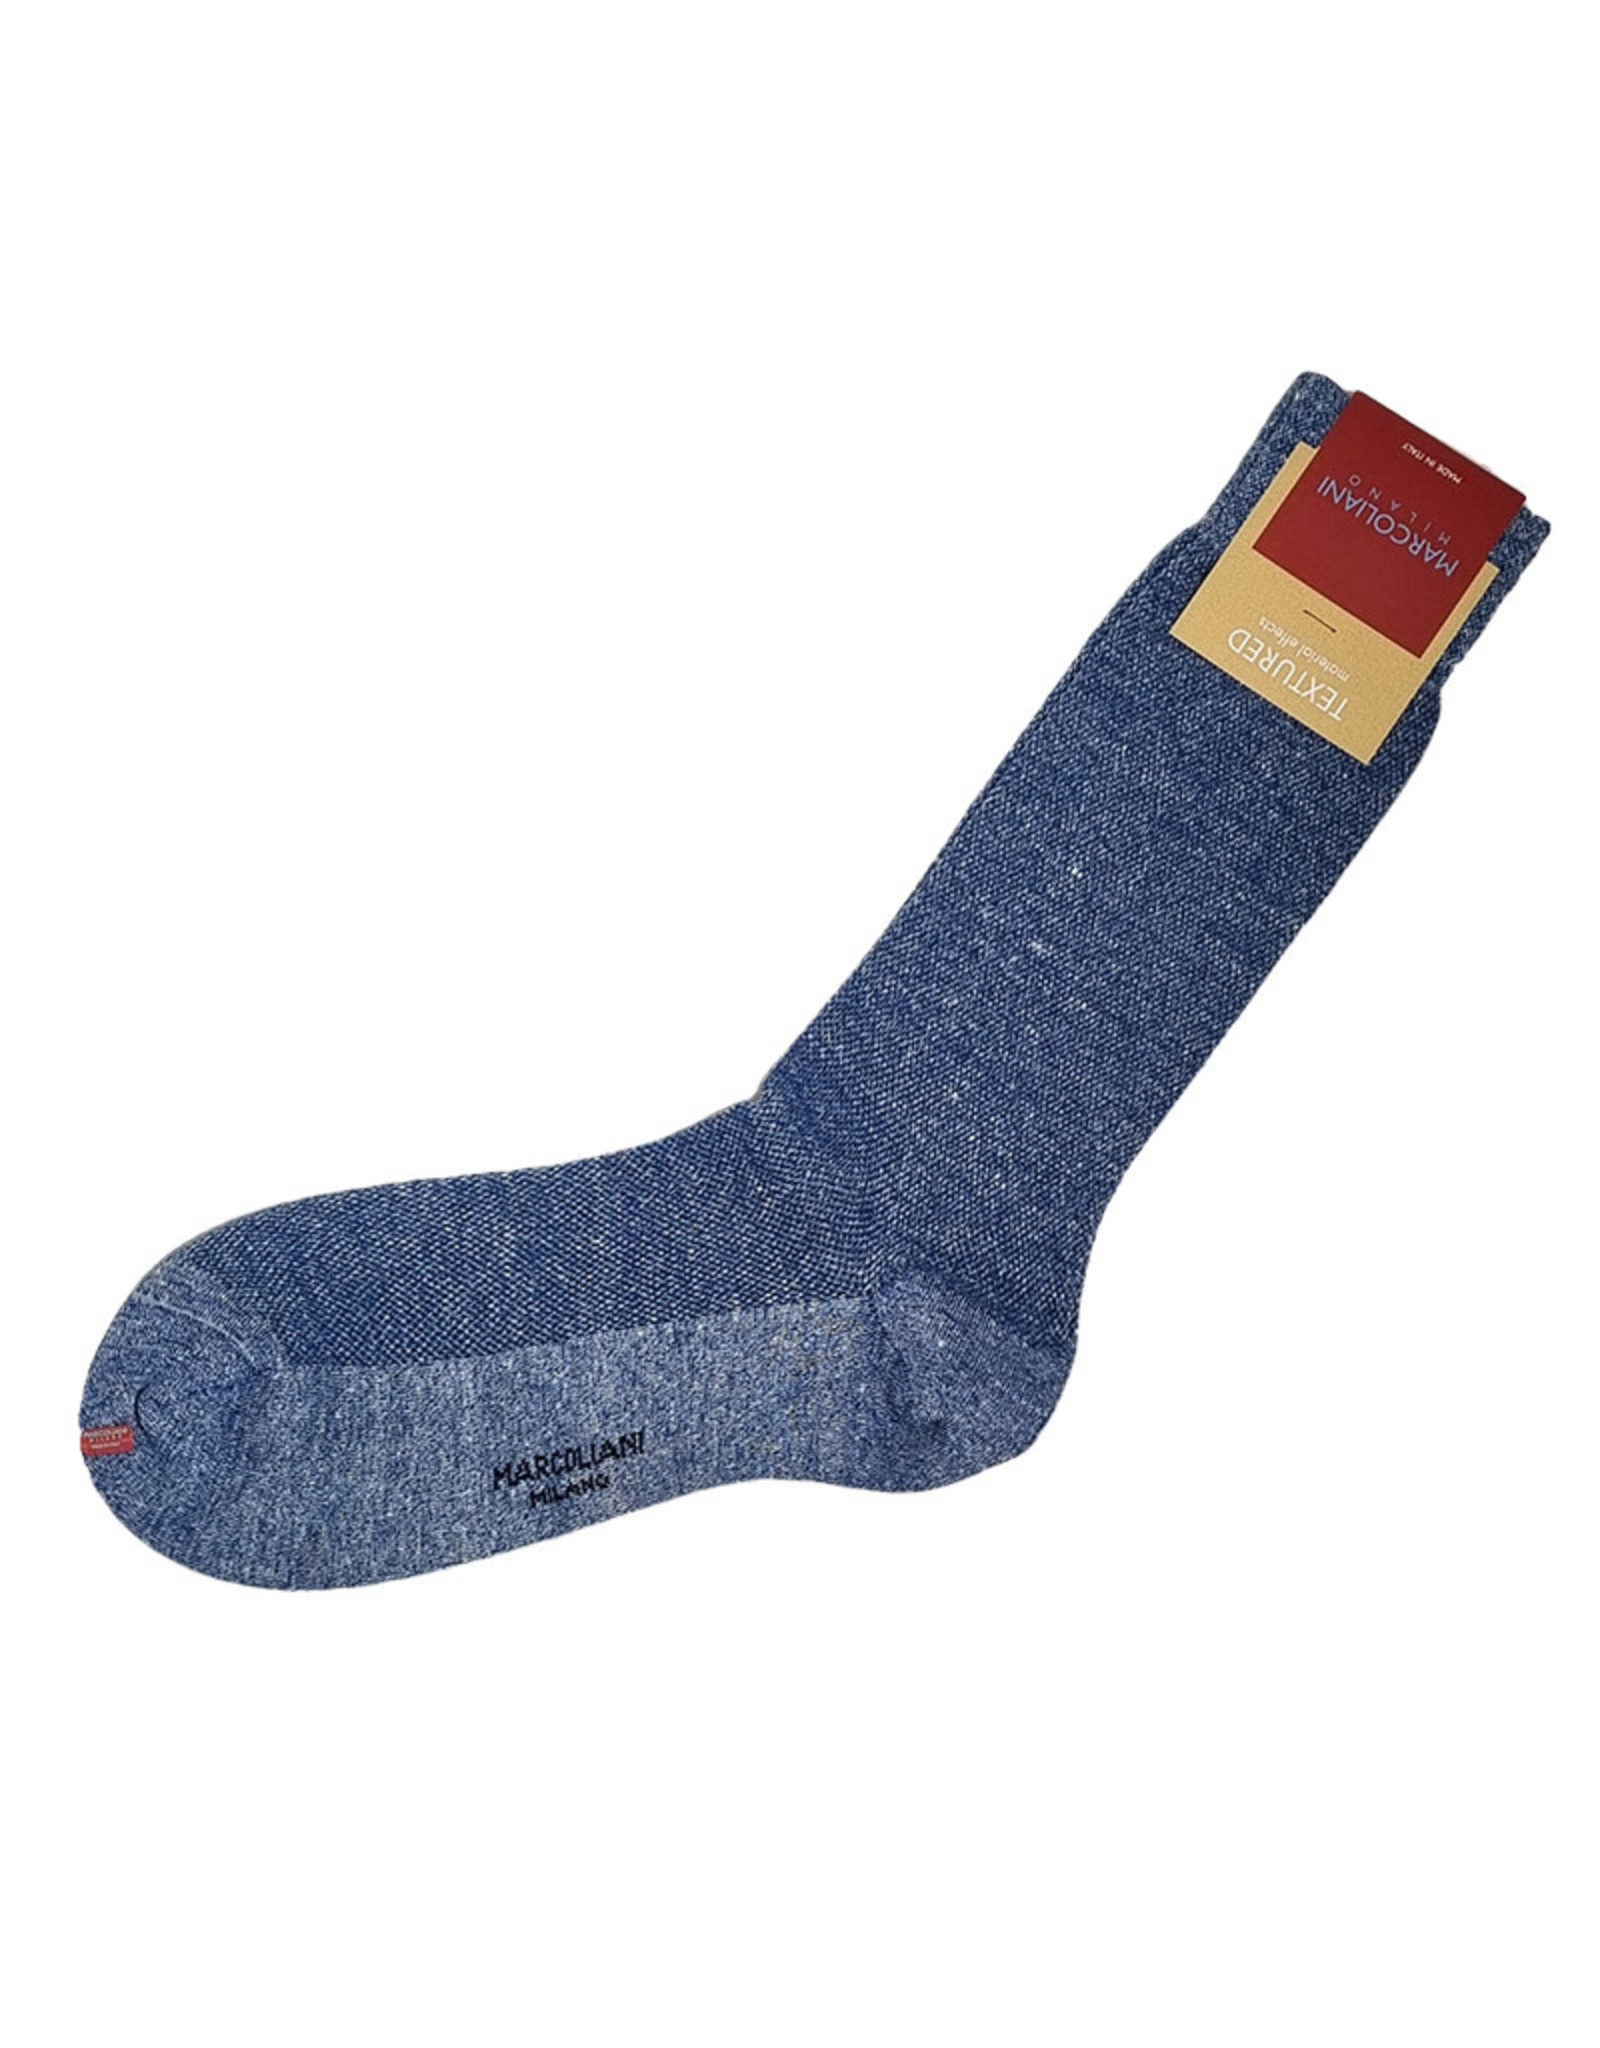 Marcoliani Marcoliani sokken lichtblauw 4450T/140